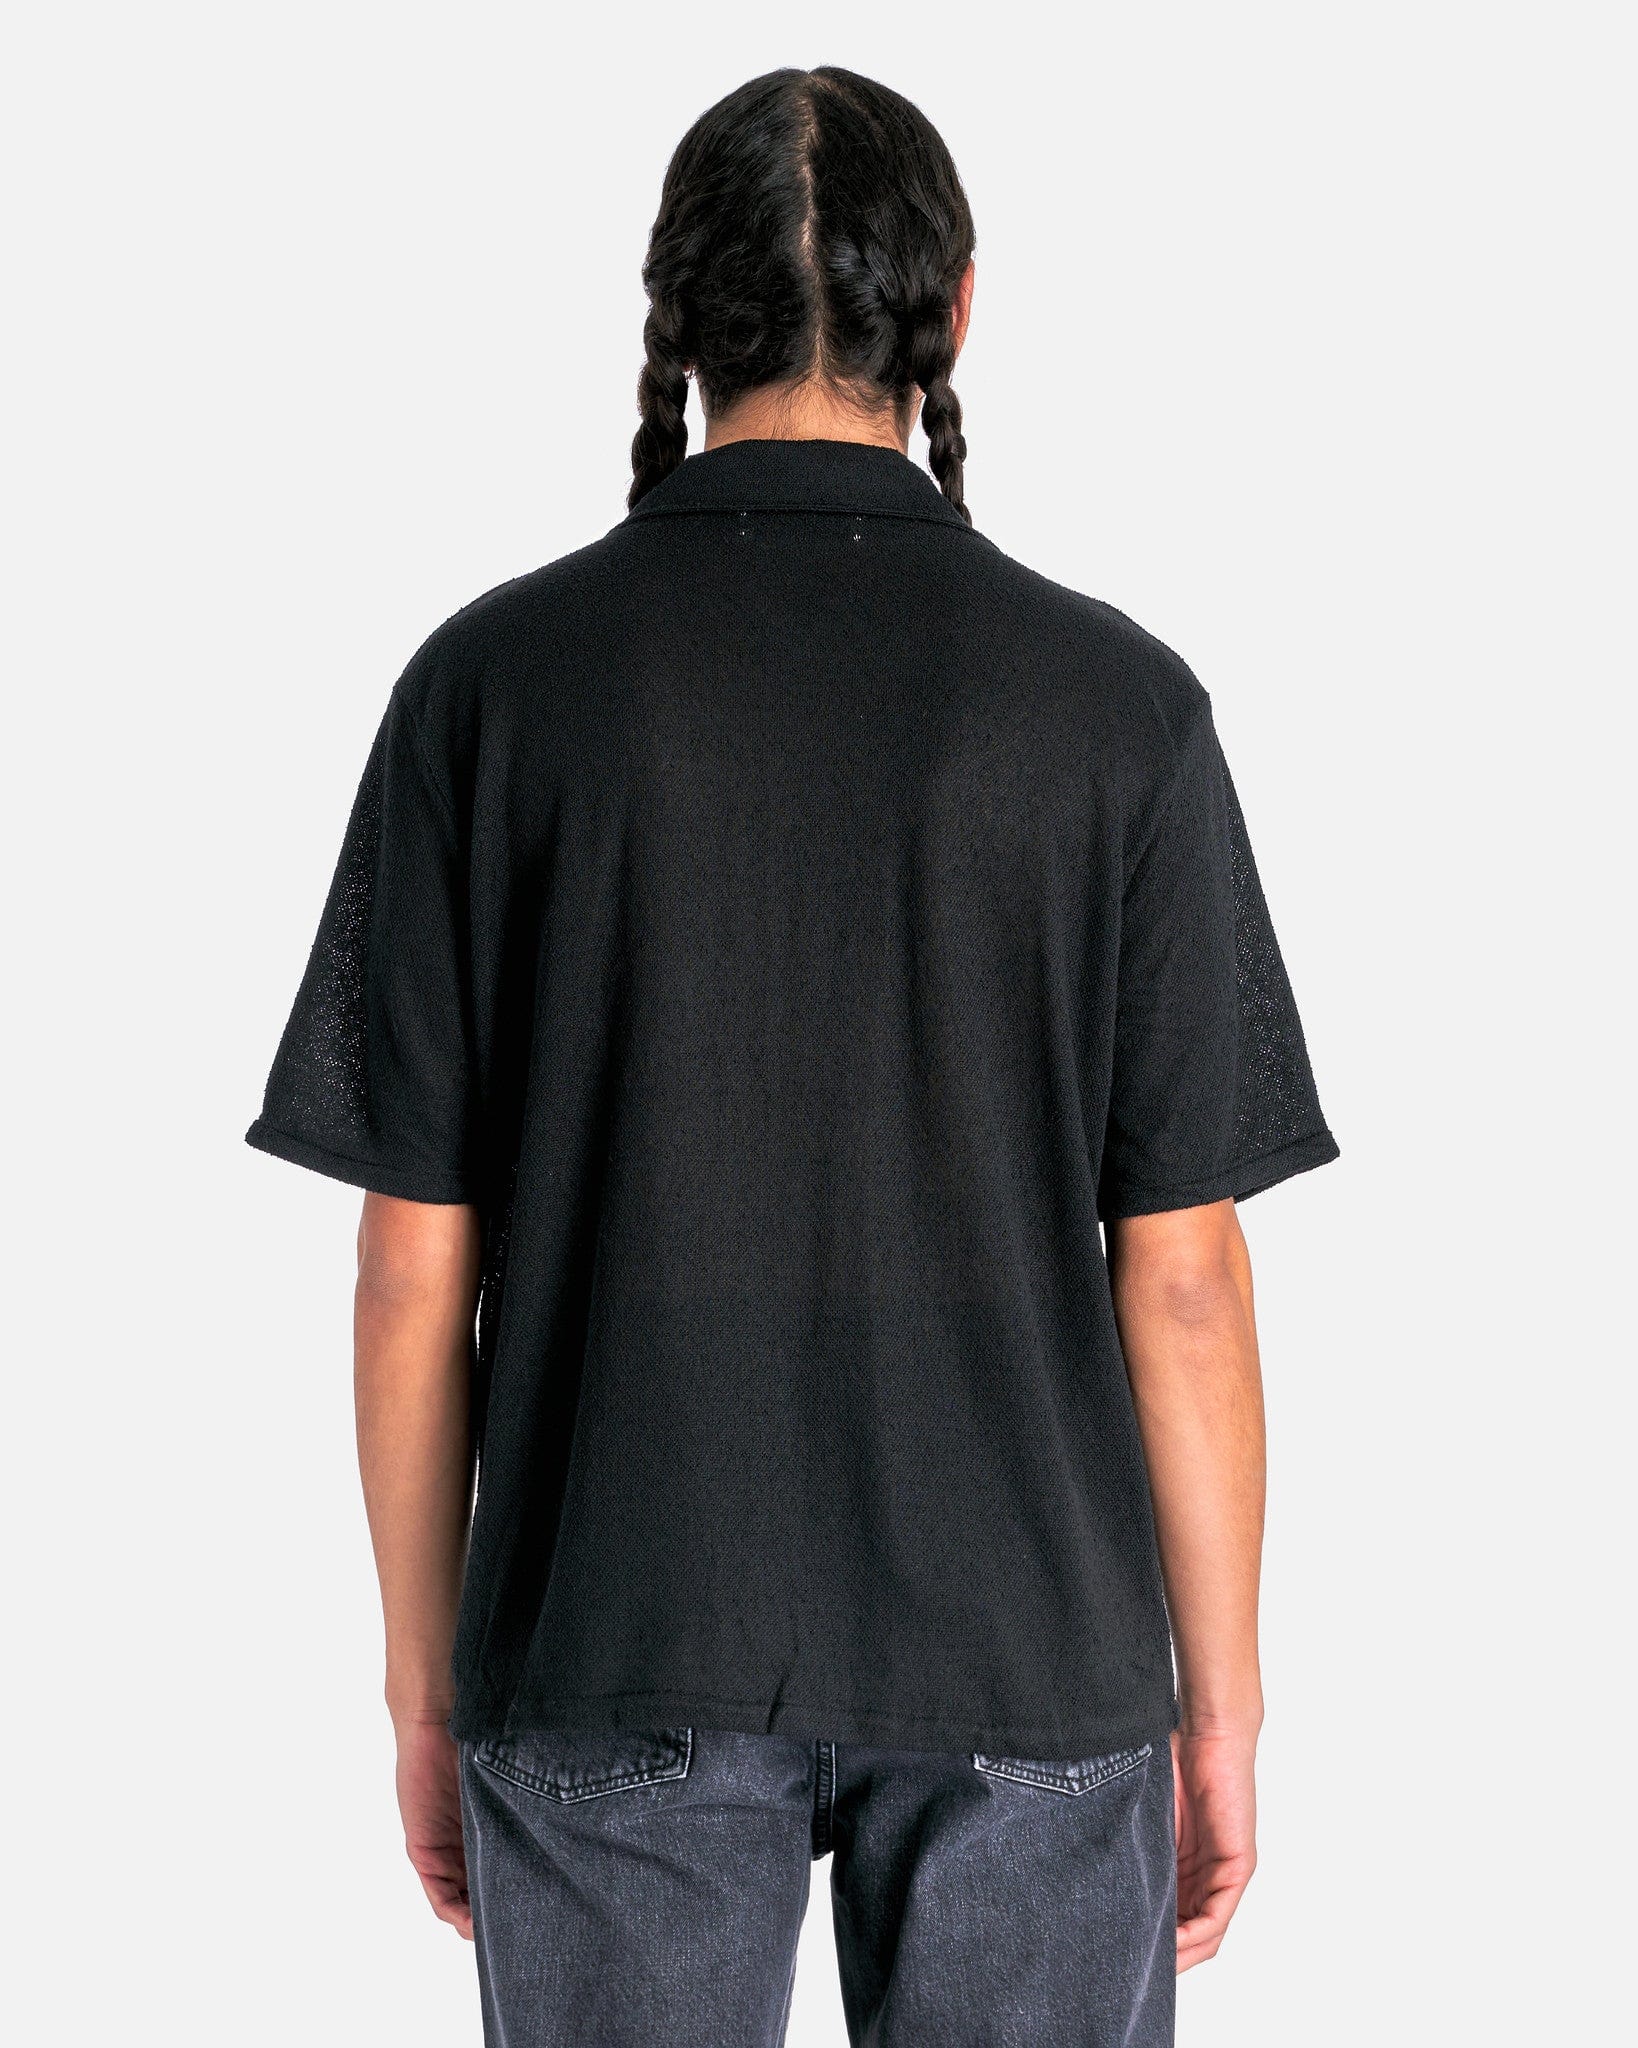 Box Shortsleeve Black in Shirt SVRN Boucle –